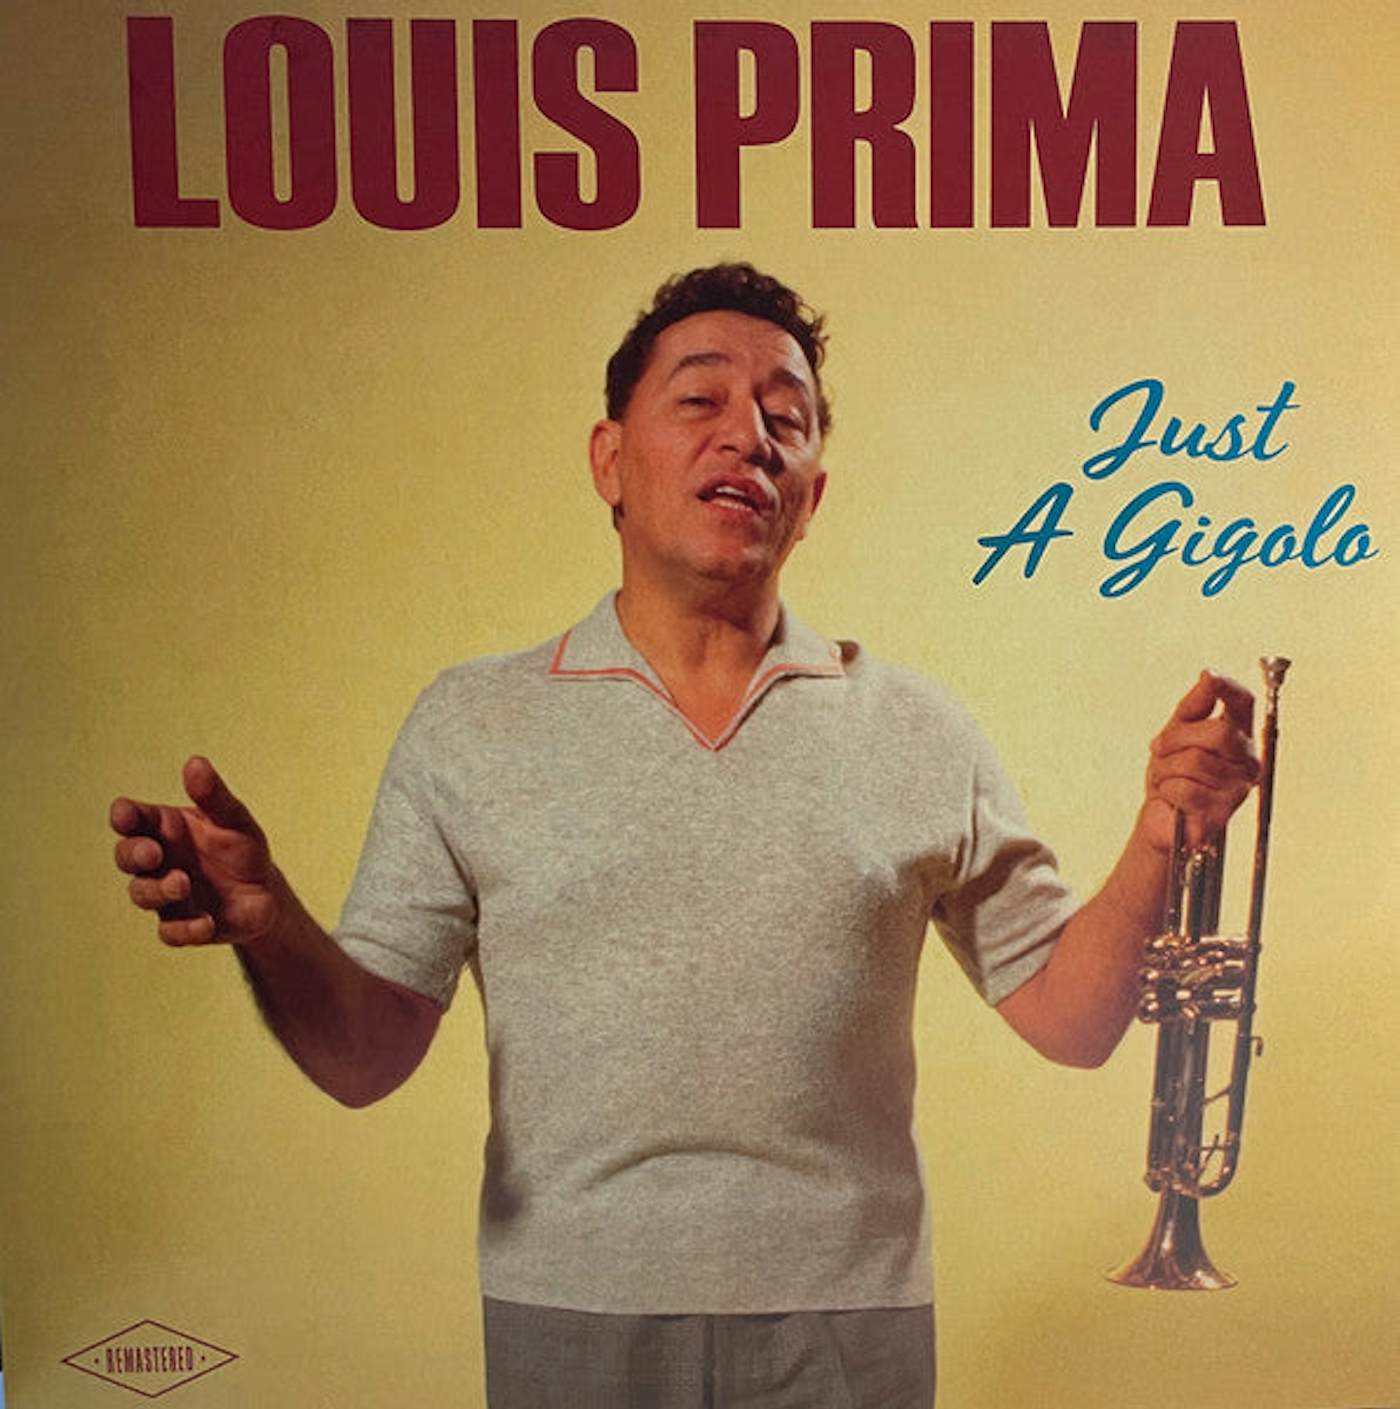 Louis Prima BEST: THE WILDEST Vinyl Record